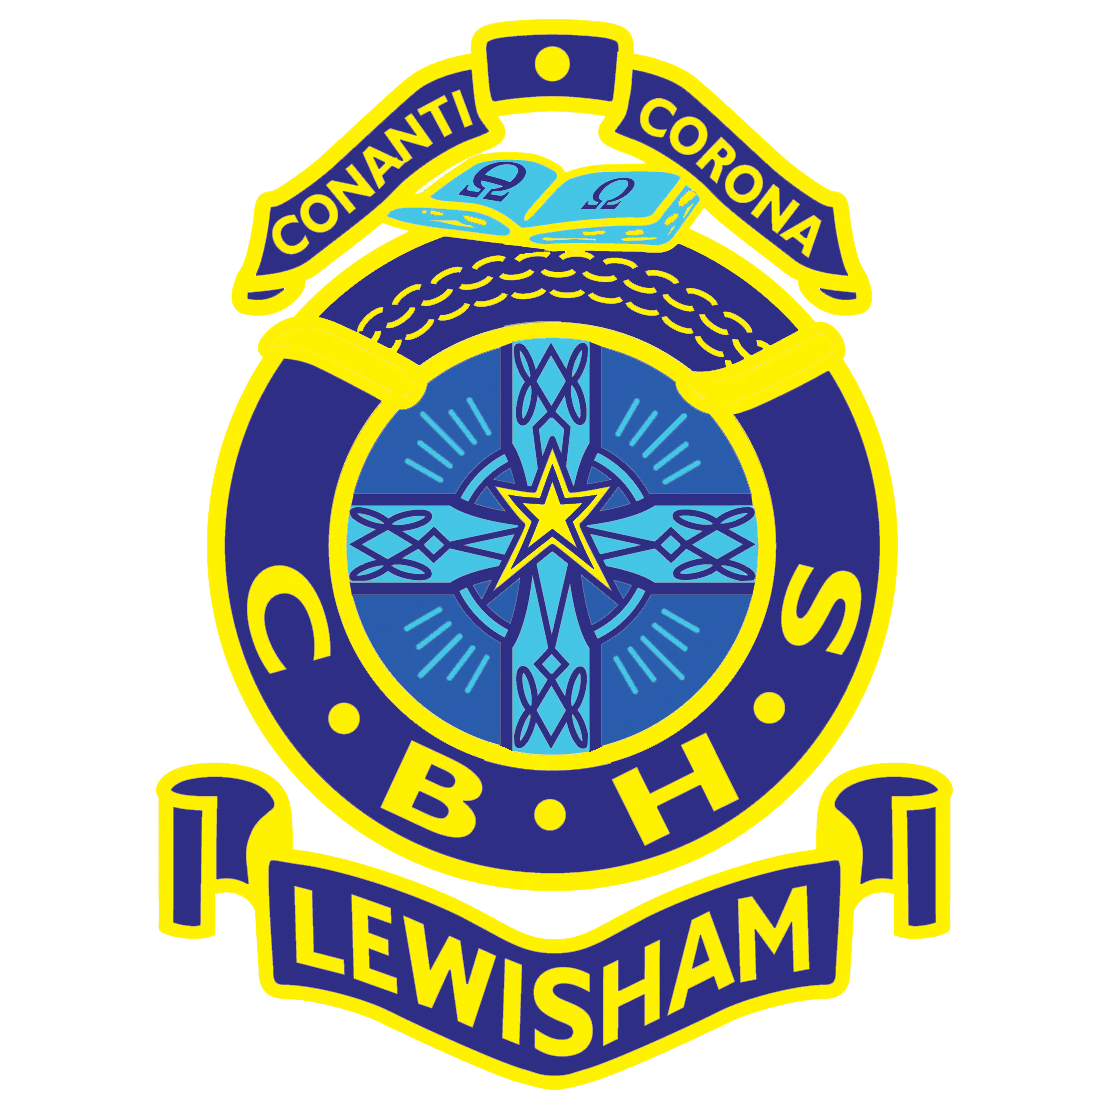 CBHS Lewisham -